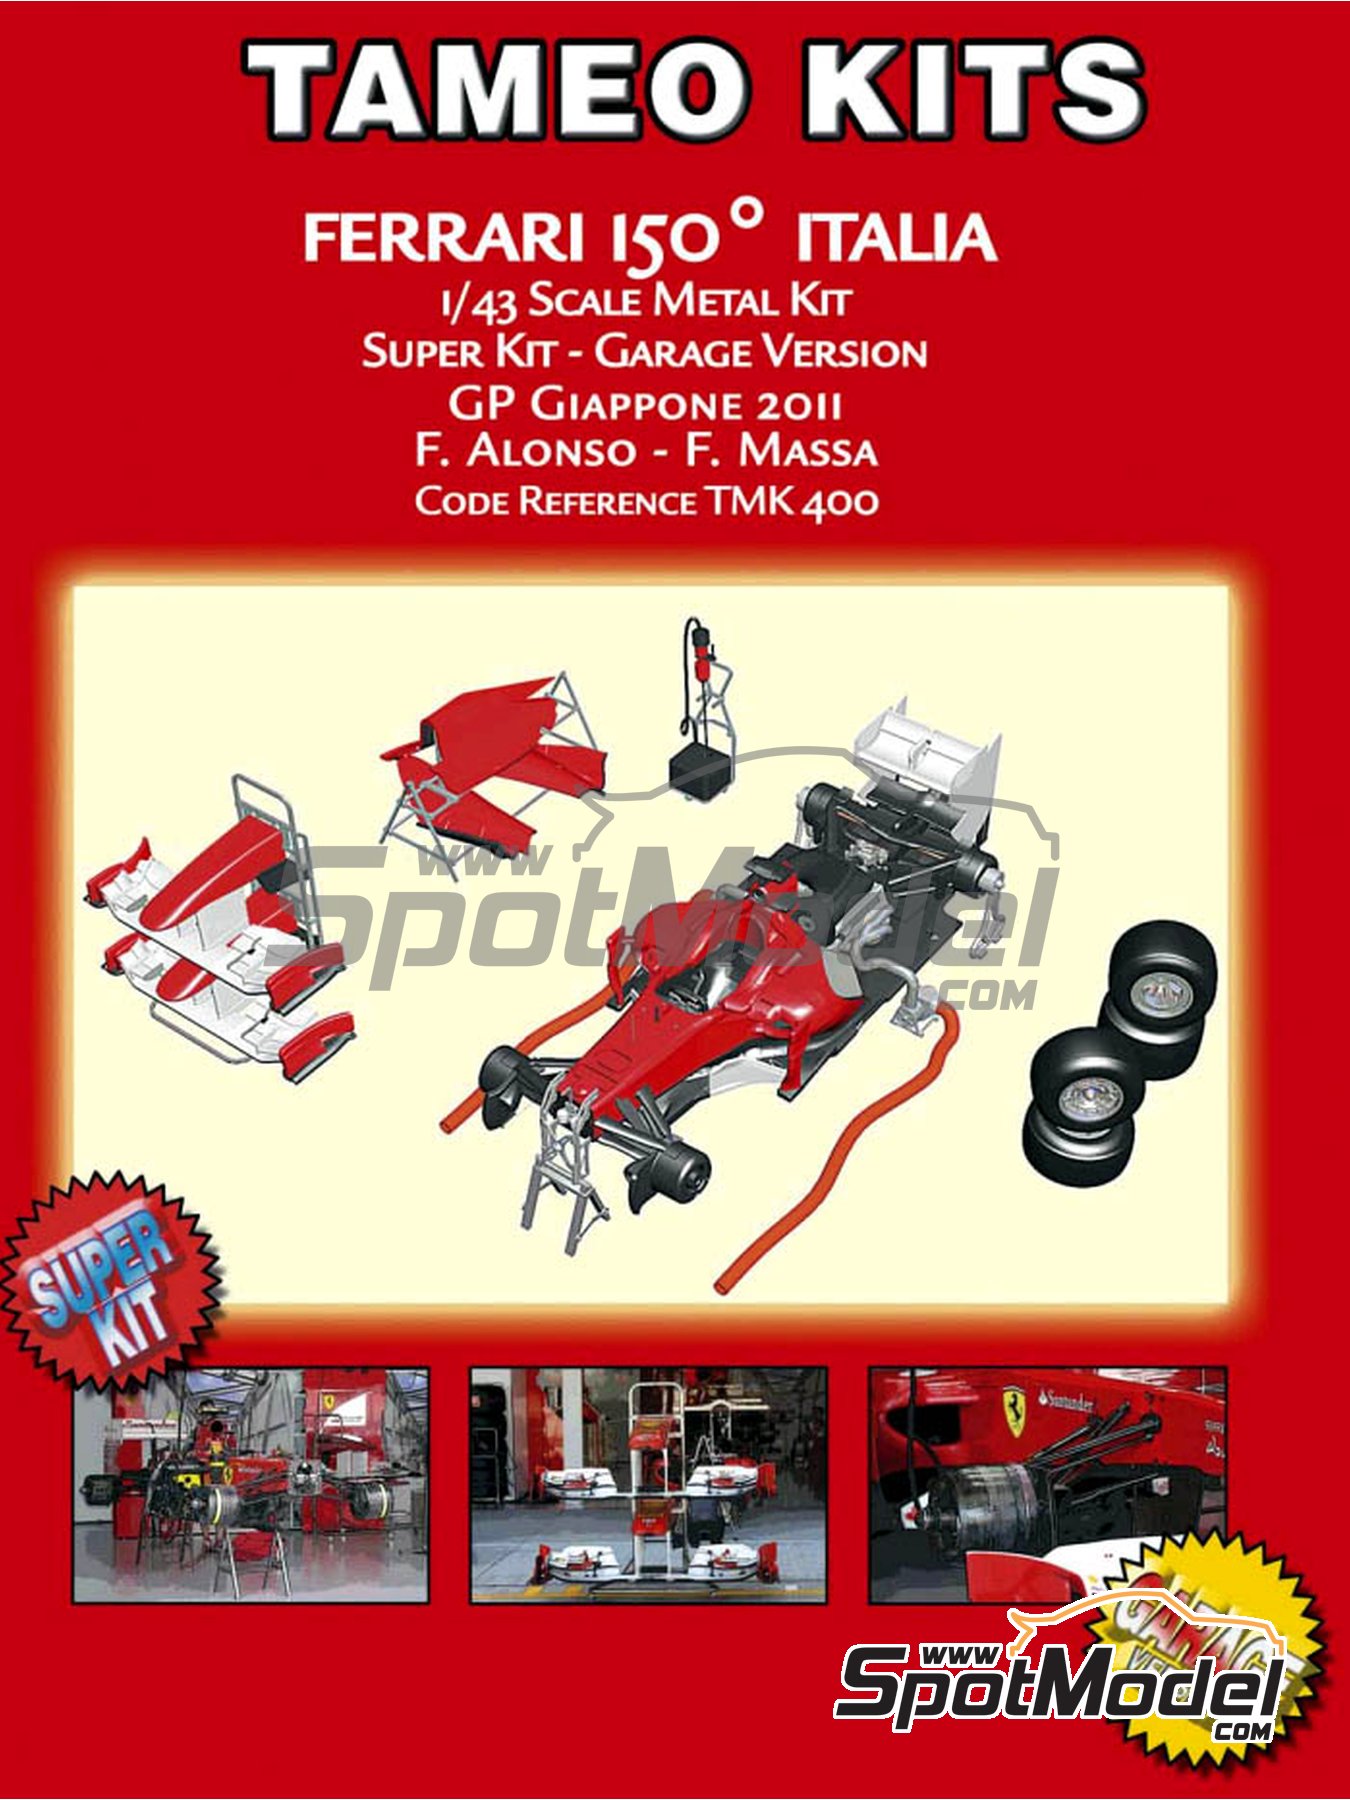 Ferrari 150 Italia Scuderia Ferrari Team sponsored by Banco Santander -  Japanese Formula 1 Grand Prix 2011. Car scale model kit in 1/43 scale  manufact